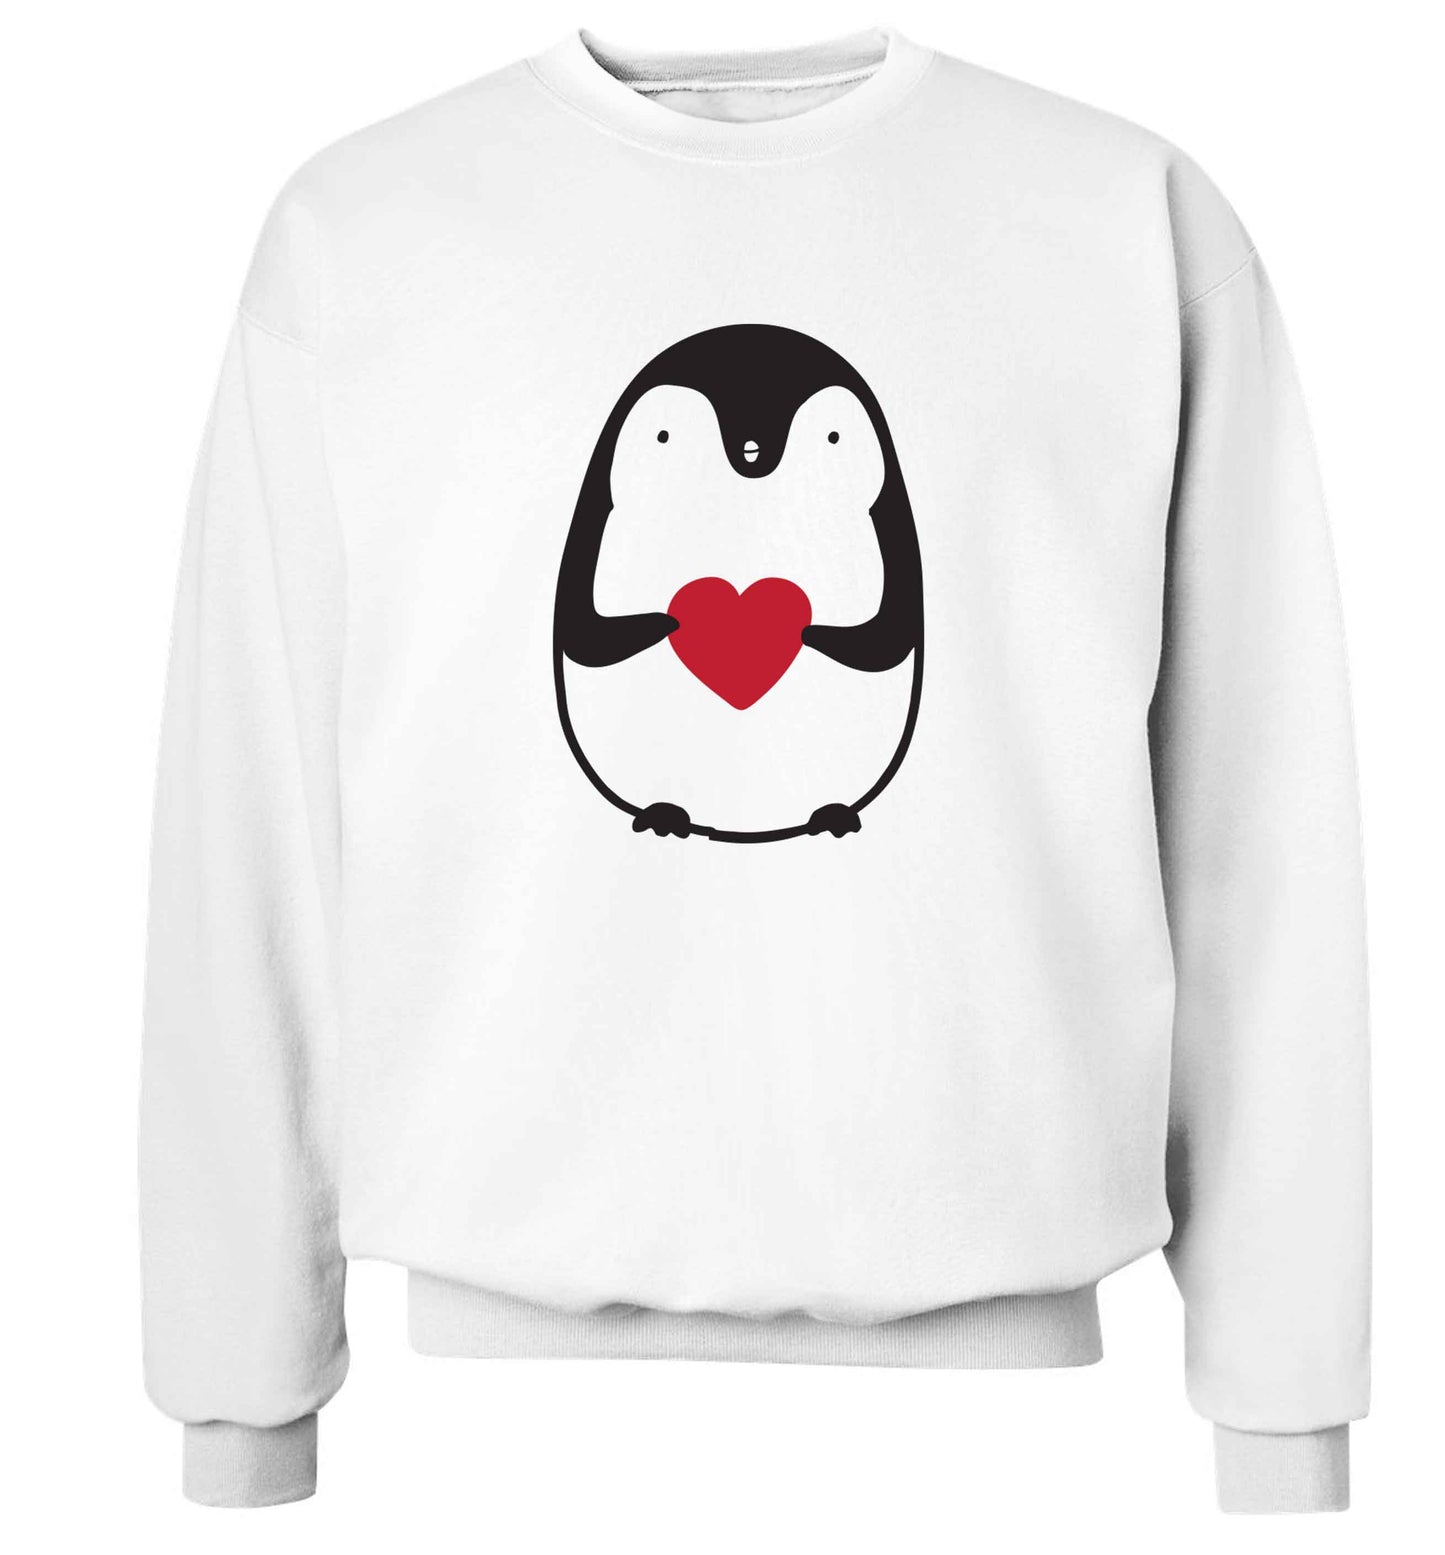 Cute penguin heart adult's unisex white sweater 2XL